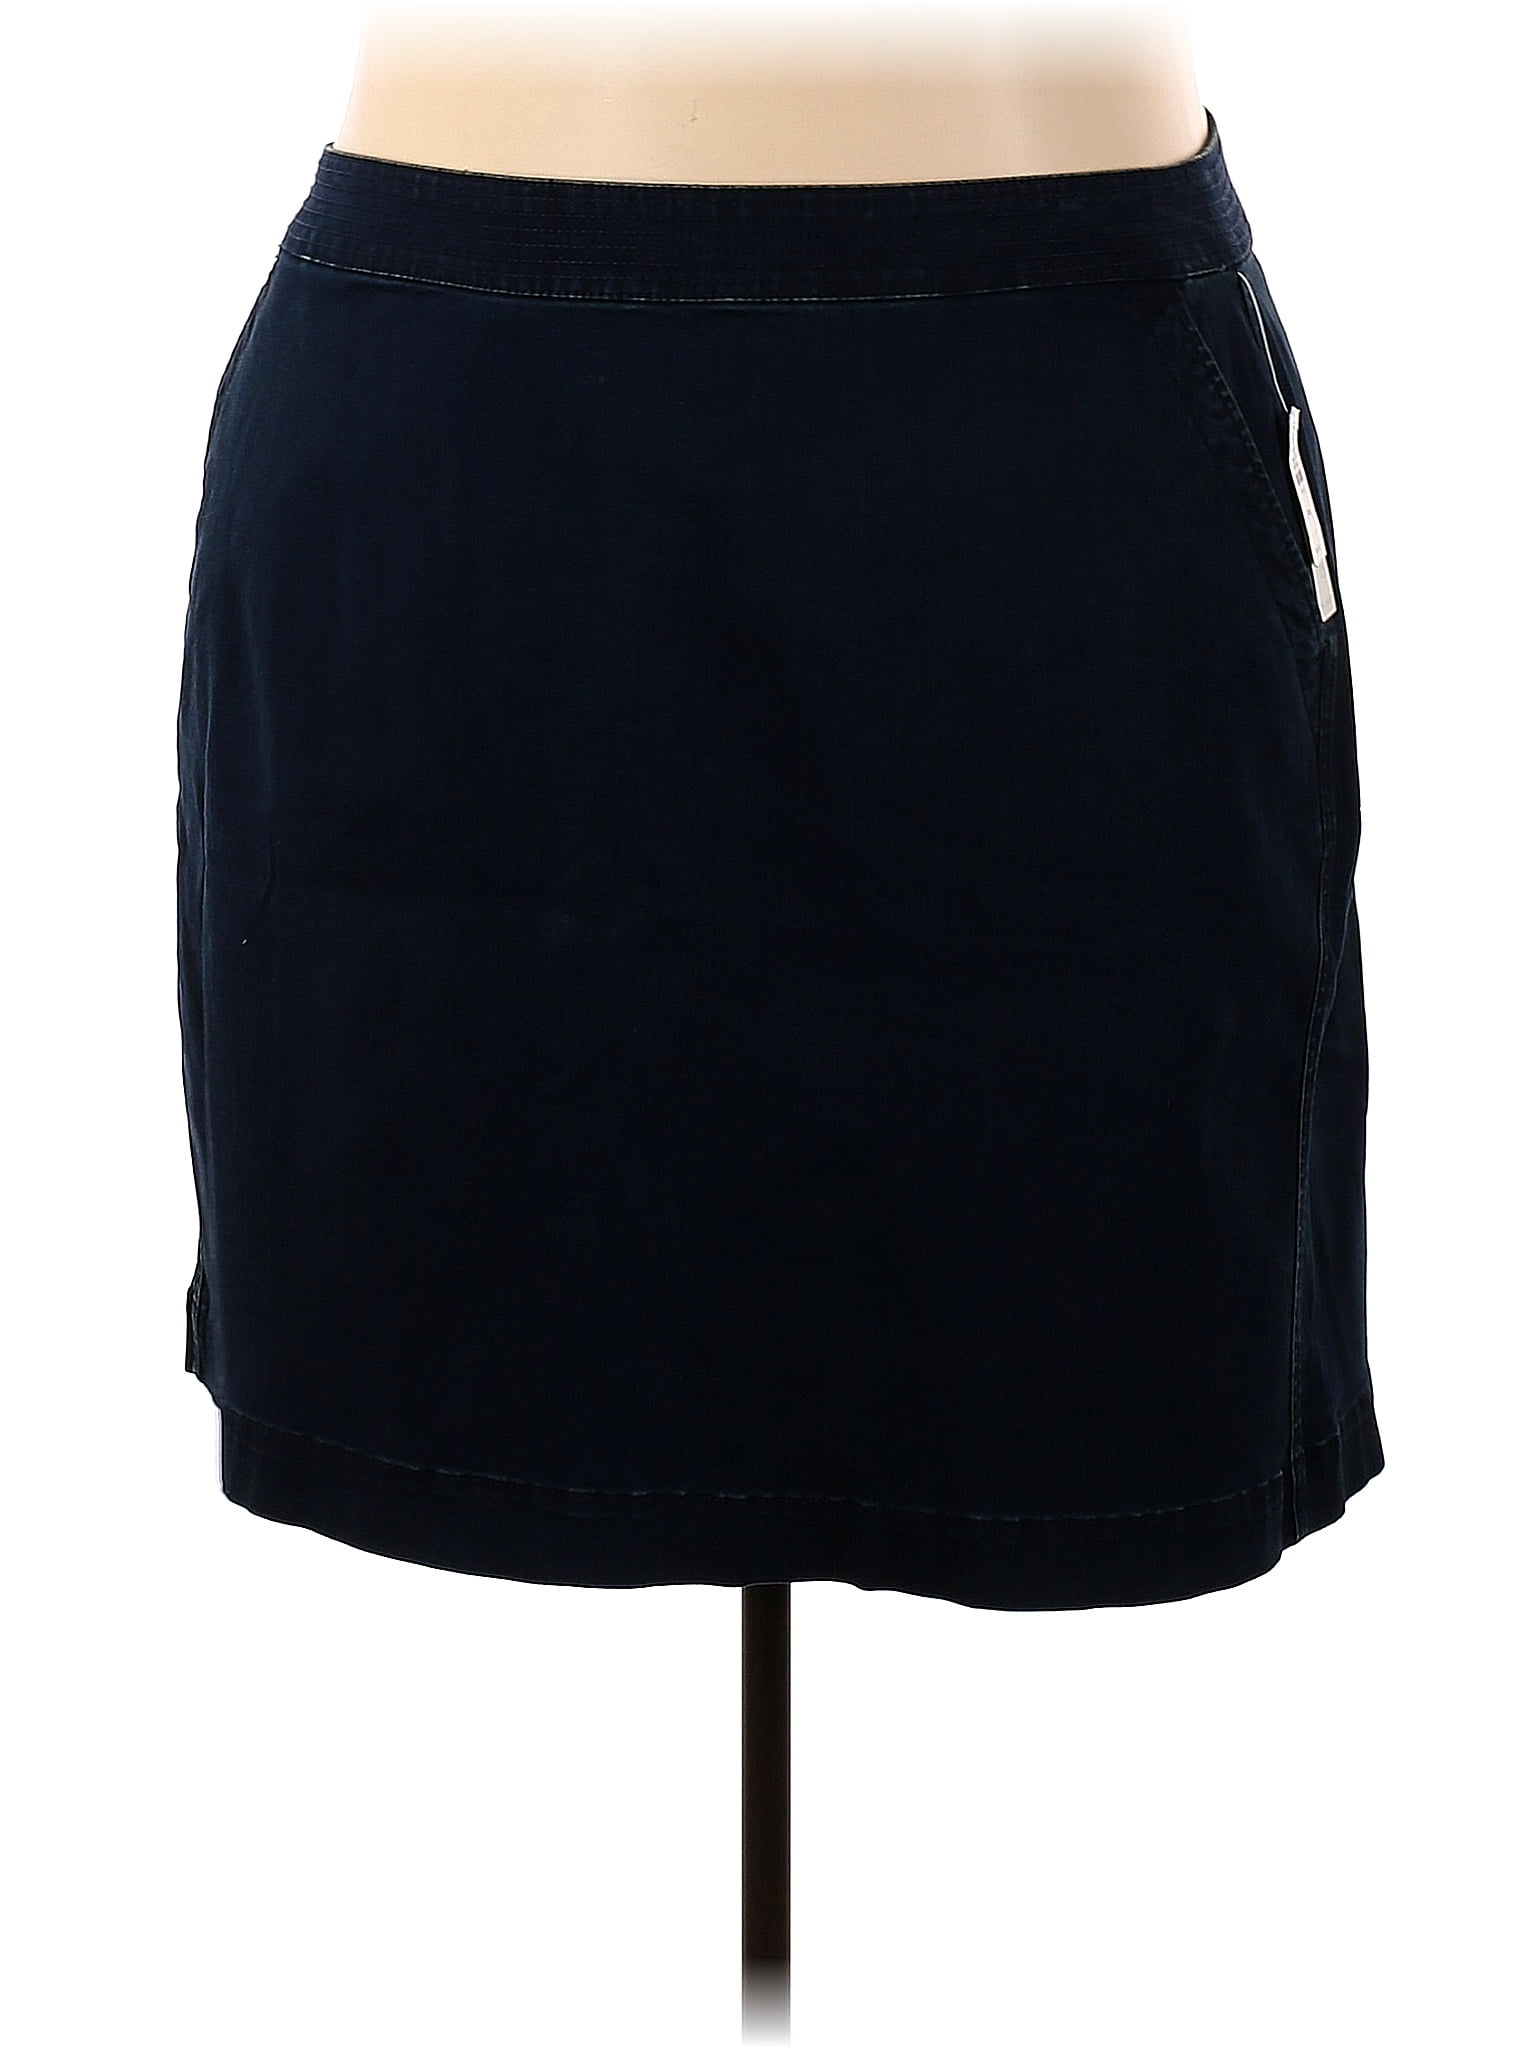 Talbots Outlet Solid Navy Blue Denim Skirt Size 24 (Plus) - 50% off ...